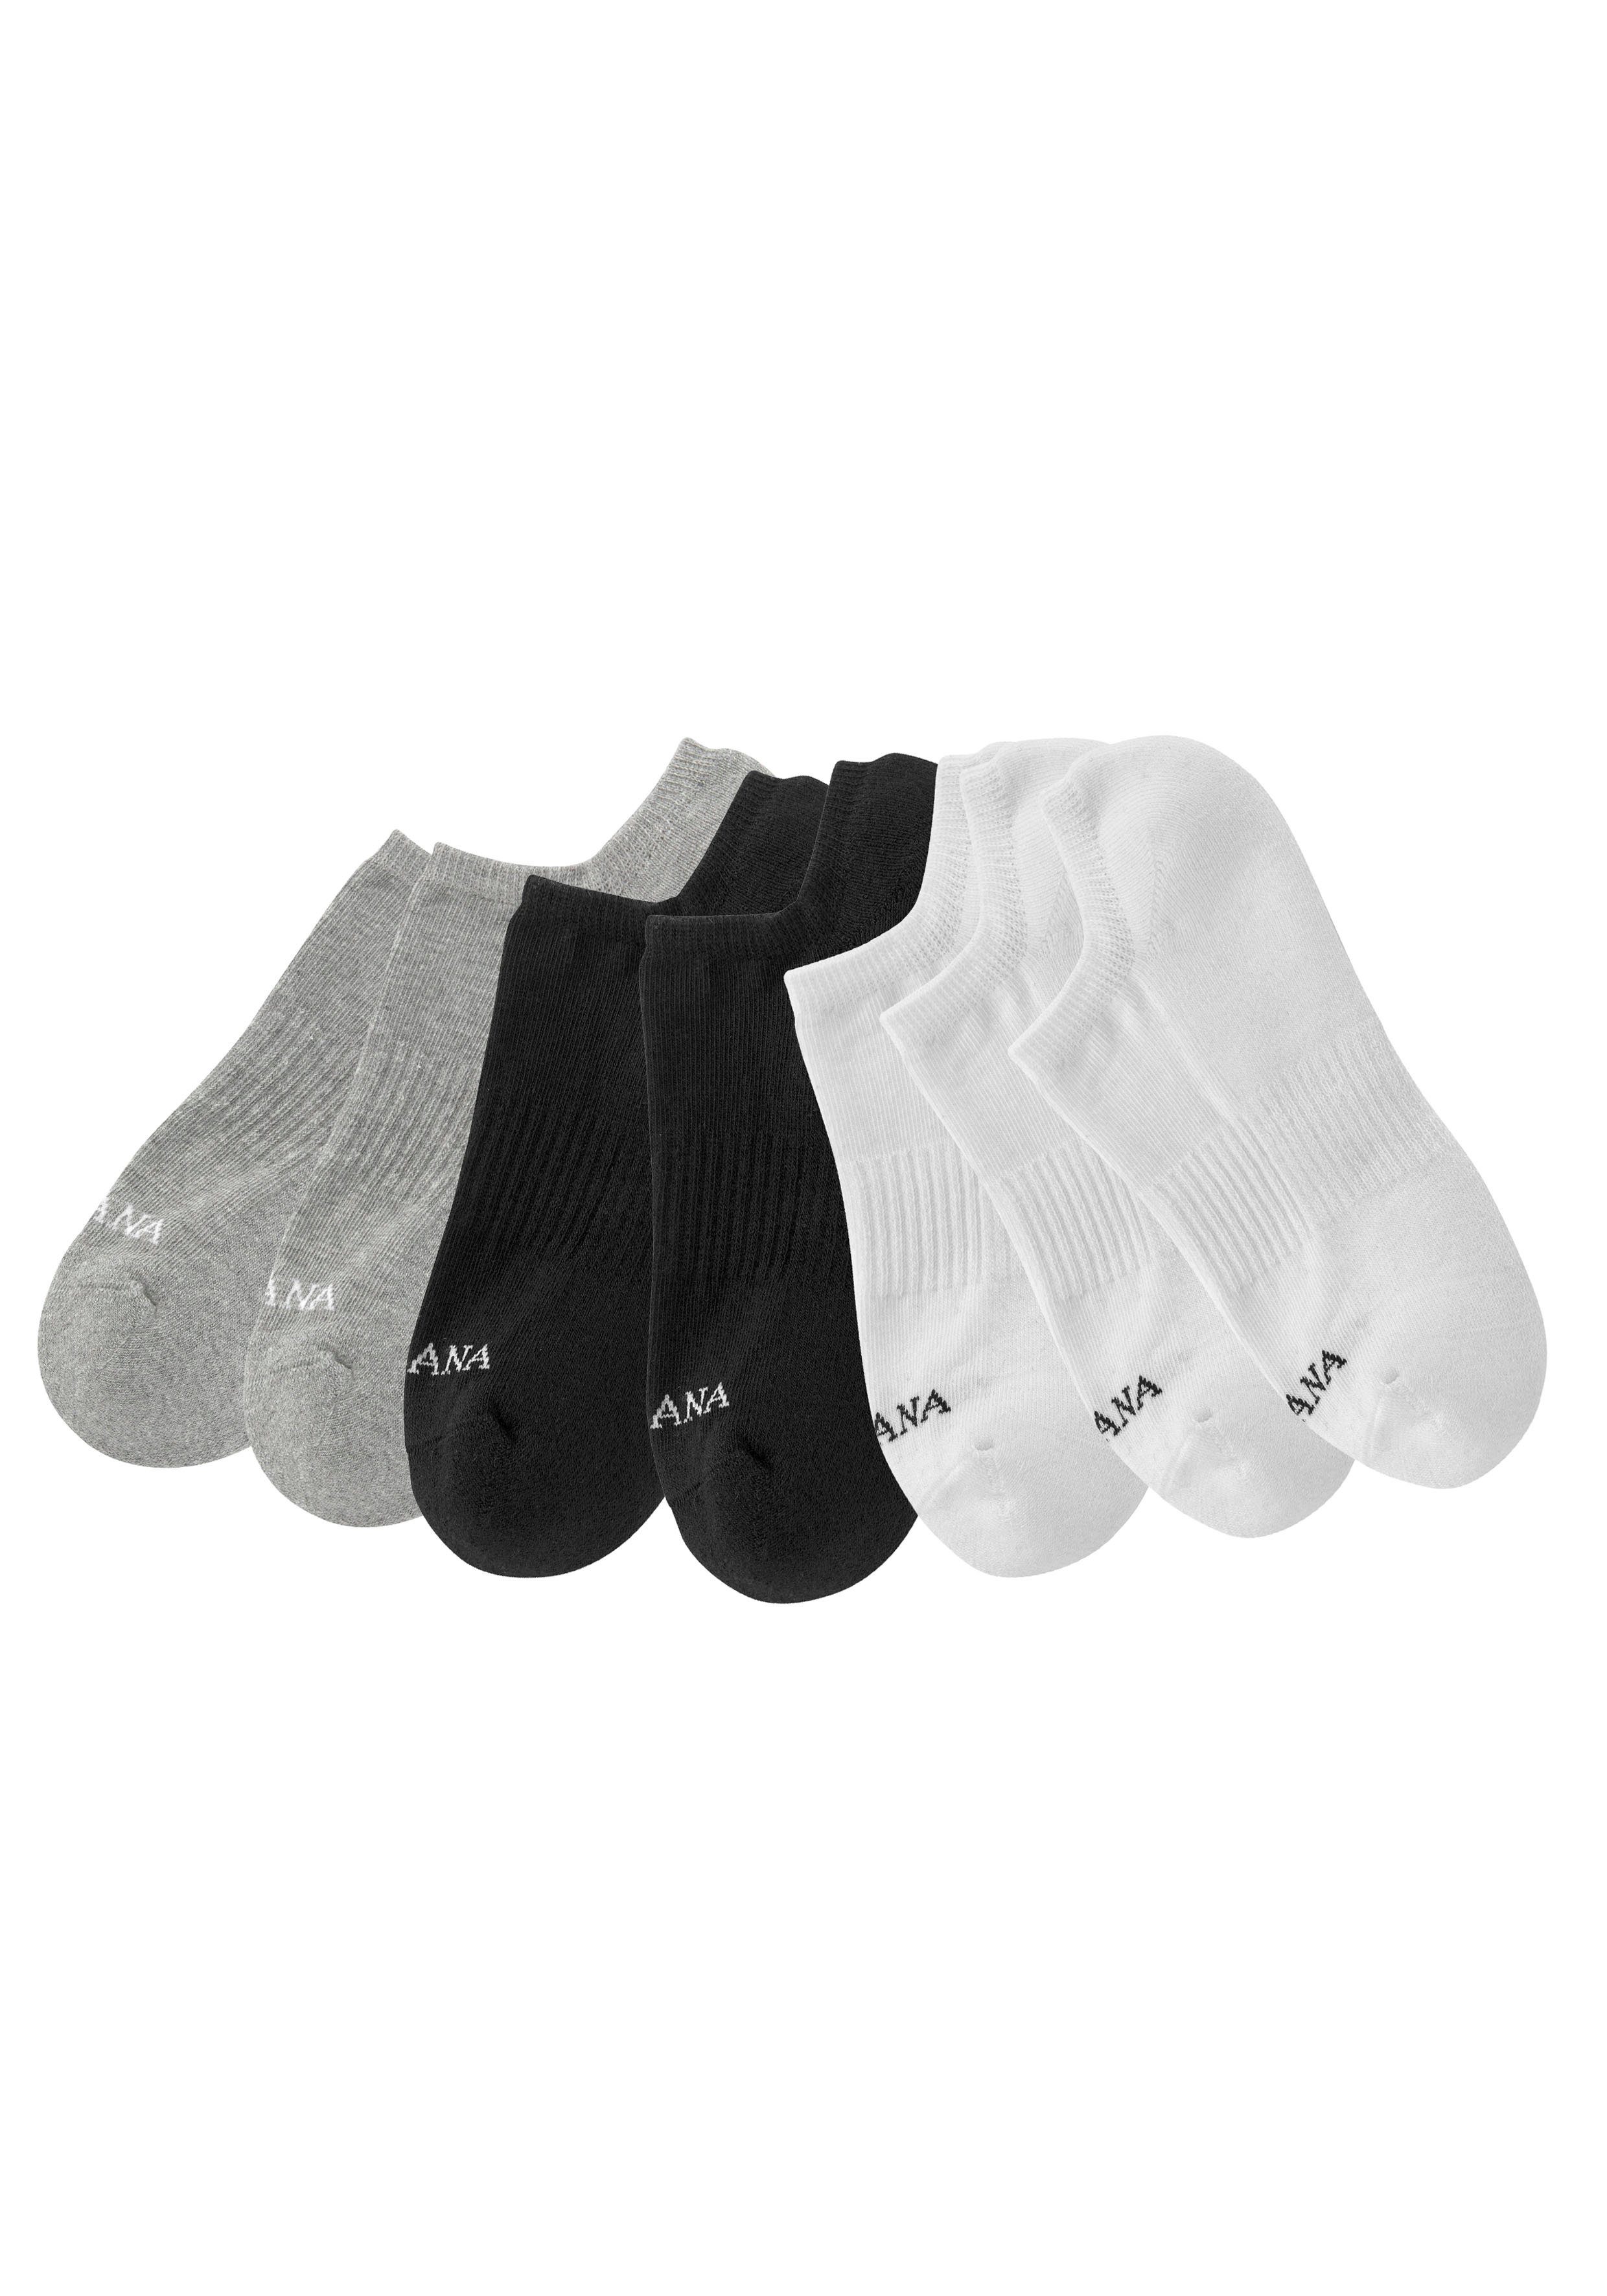 2x Sneakersocken 3x 7-Paar) ACTIVE Fußfrottee weiß, schwarz, 2x (Set, mit grau-meliert LASCANA